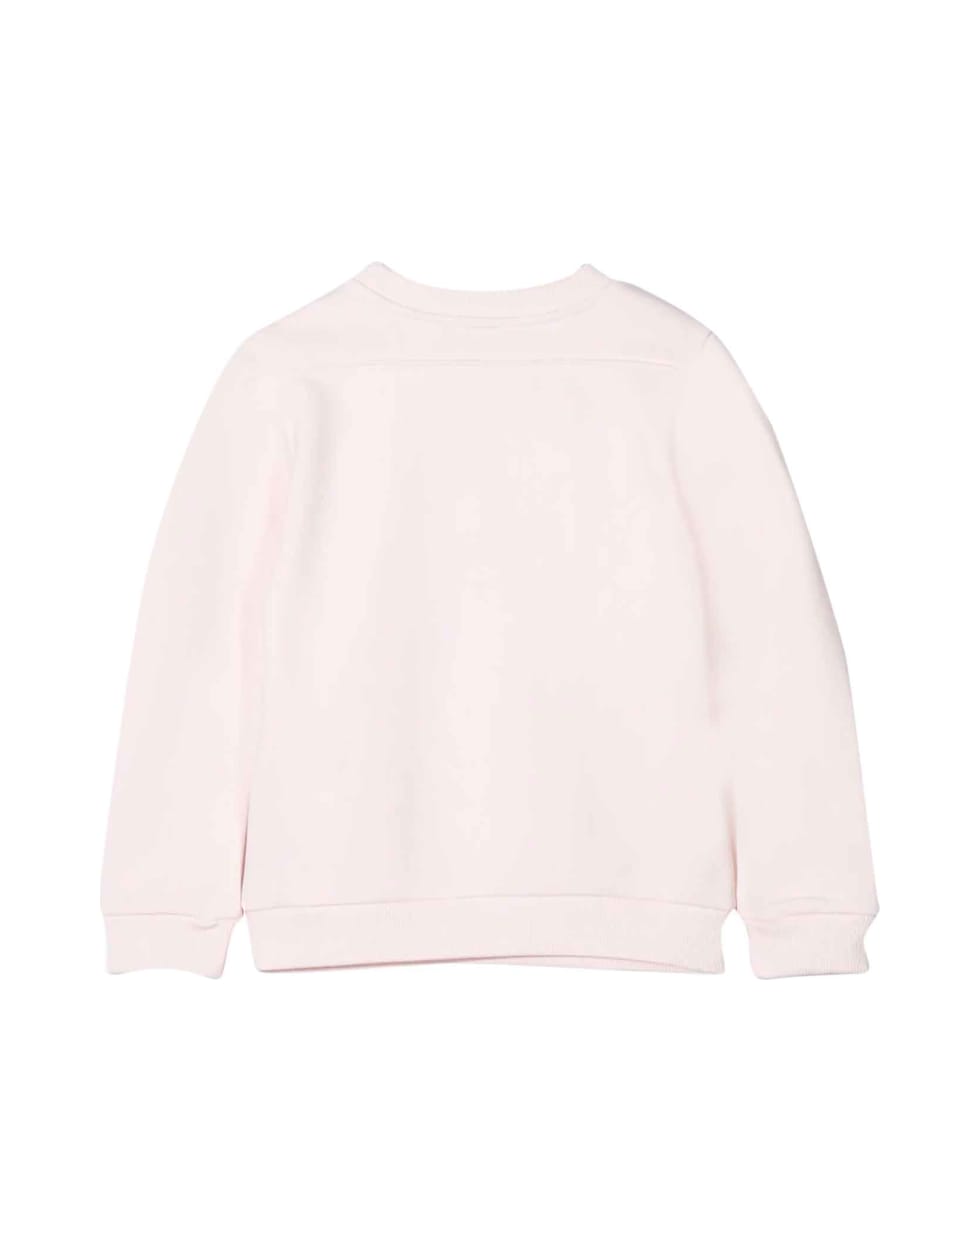 Givenchy Unisex Pink Sweatshirt - S Rosa Pallido